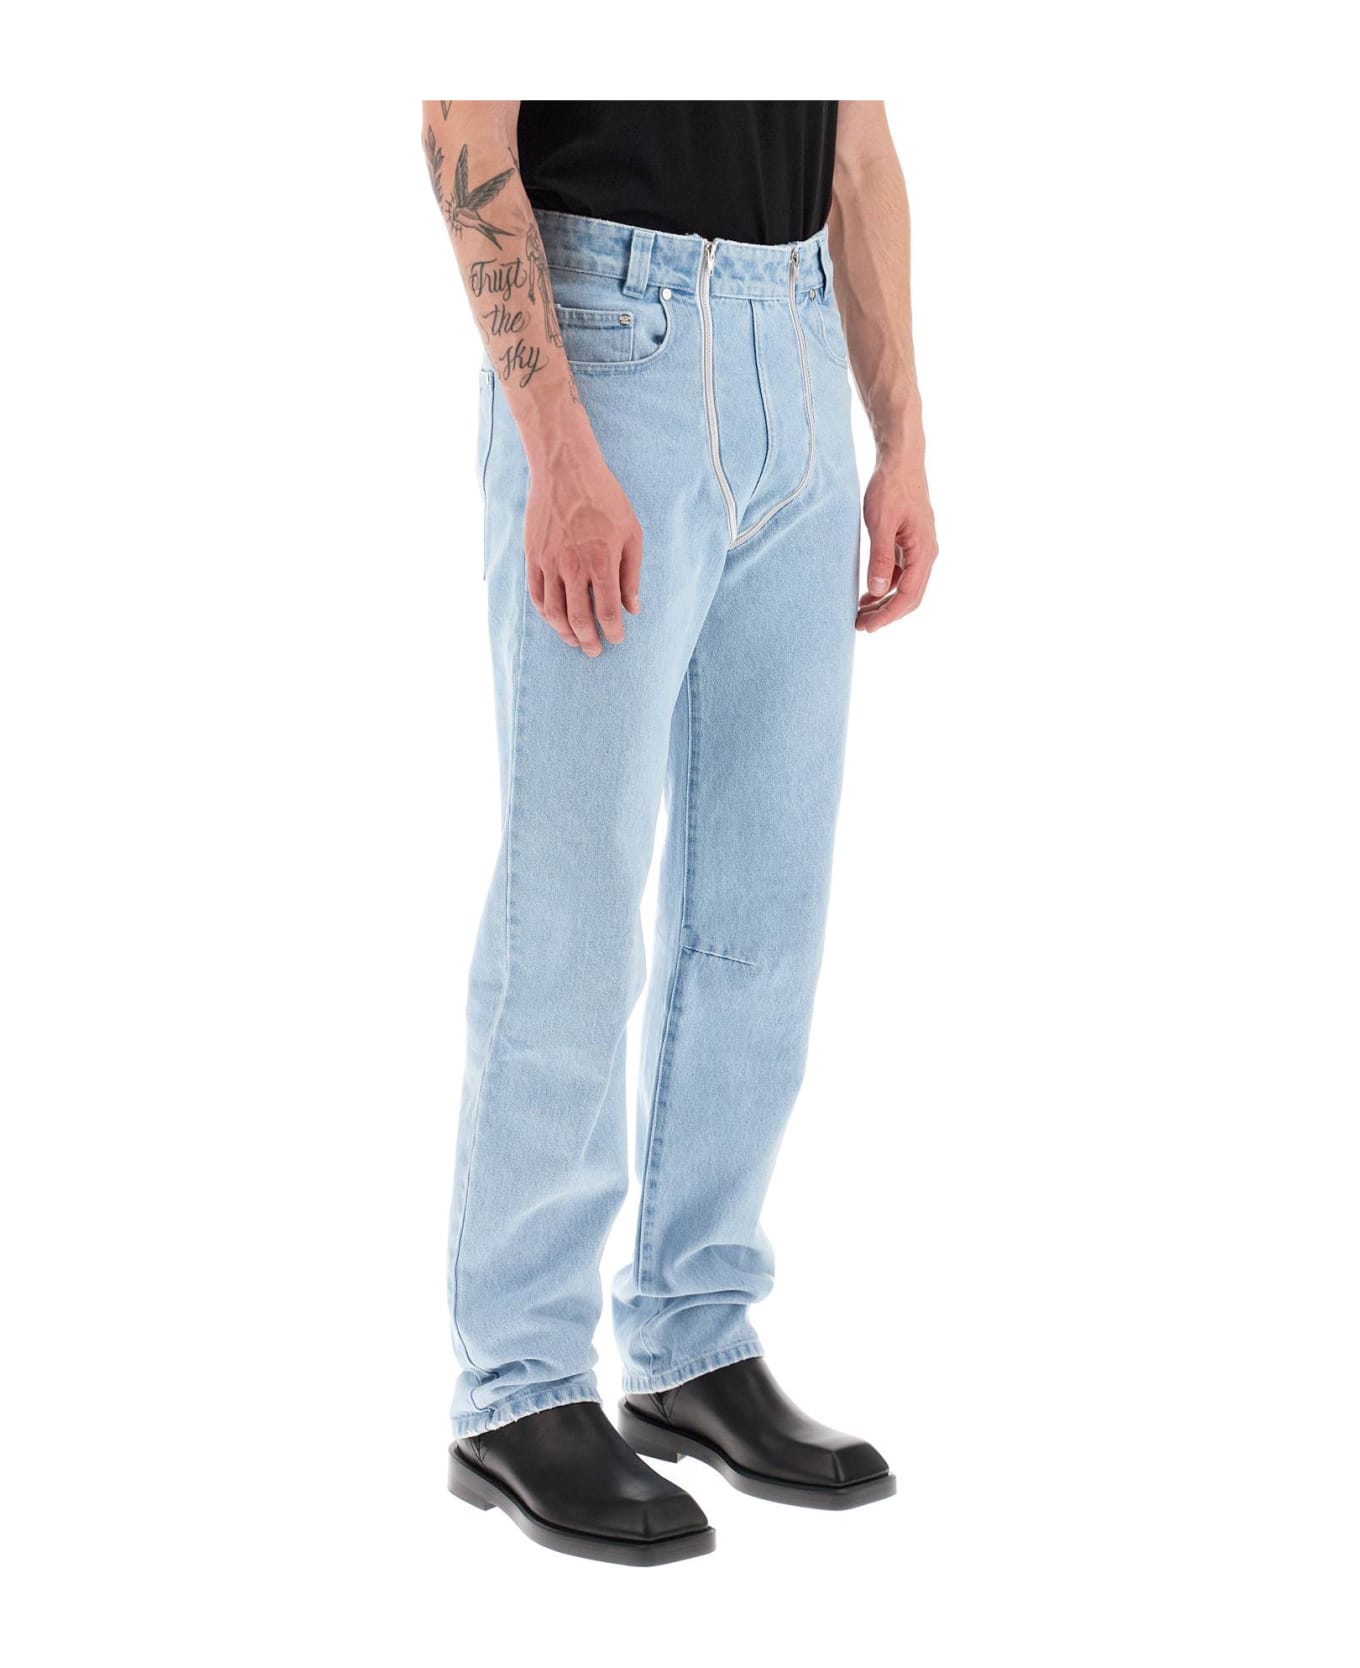 GMBH Straight Leg Jeans With Double Zipper - LIGHT INDIGO BLUE (Light blue) デニム